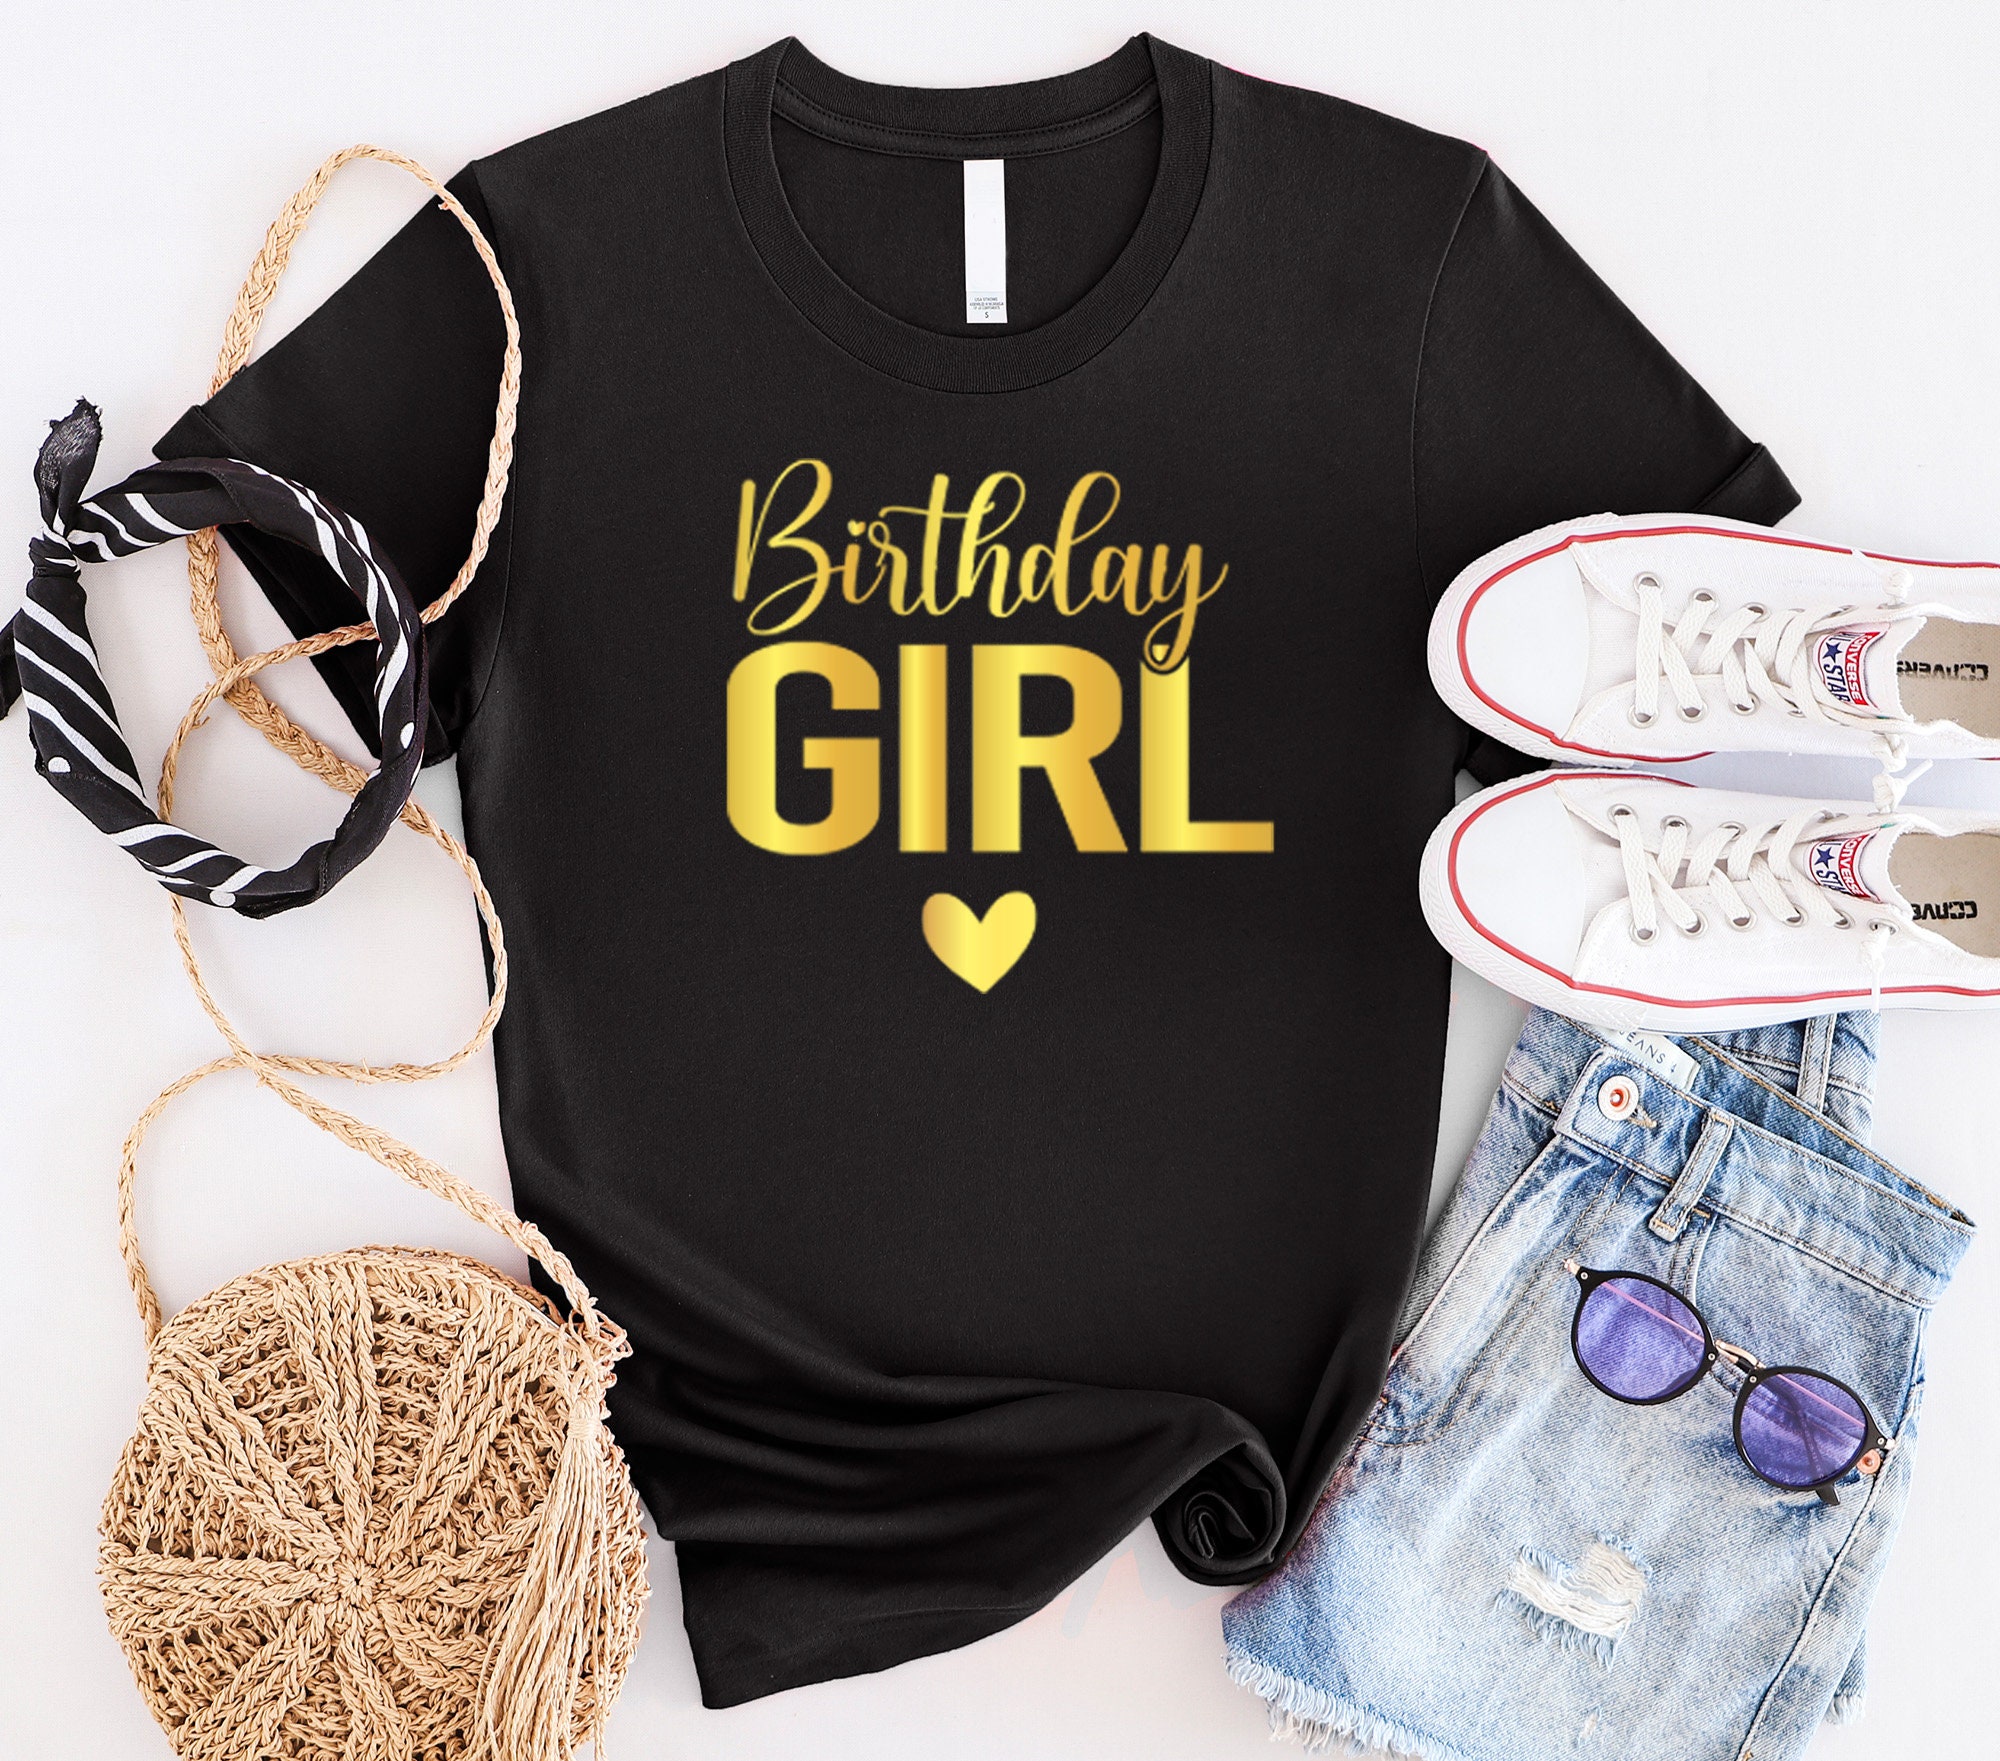 Discover Birthday Boy Shirt, Birthday Girl Shirt, Birthday Trip Shirt